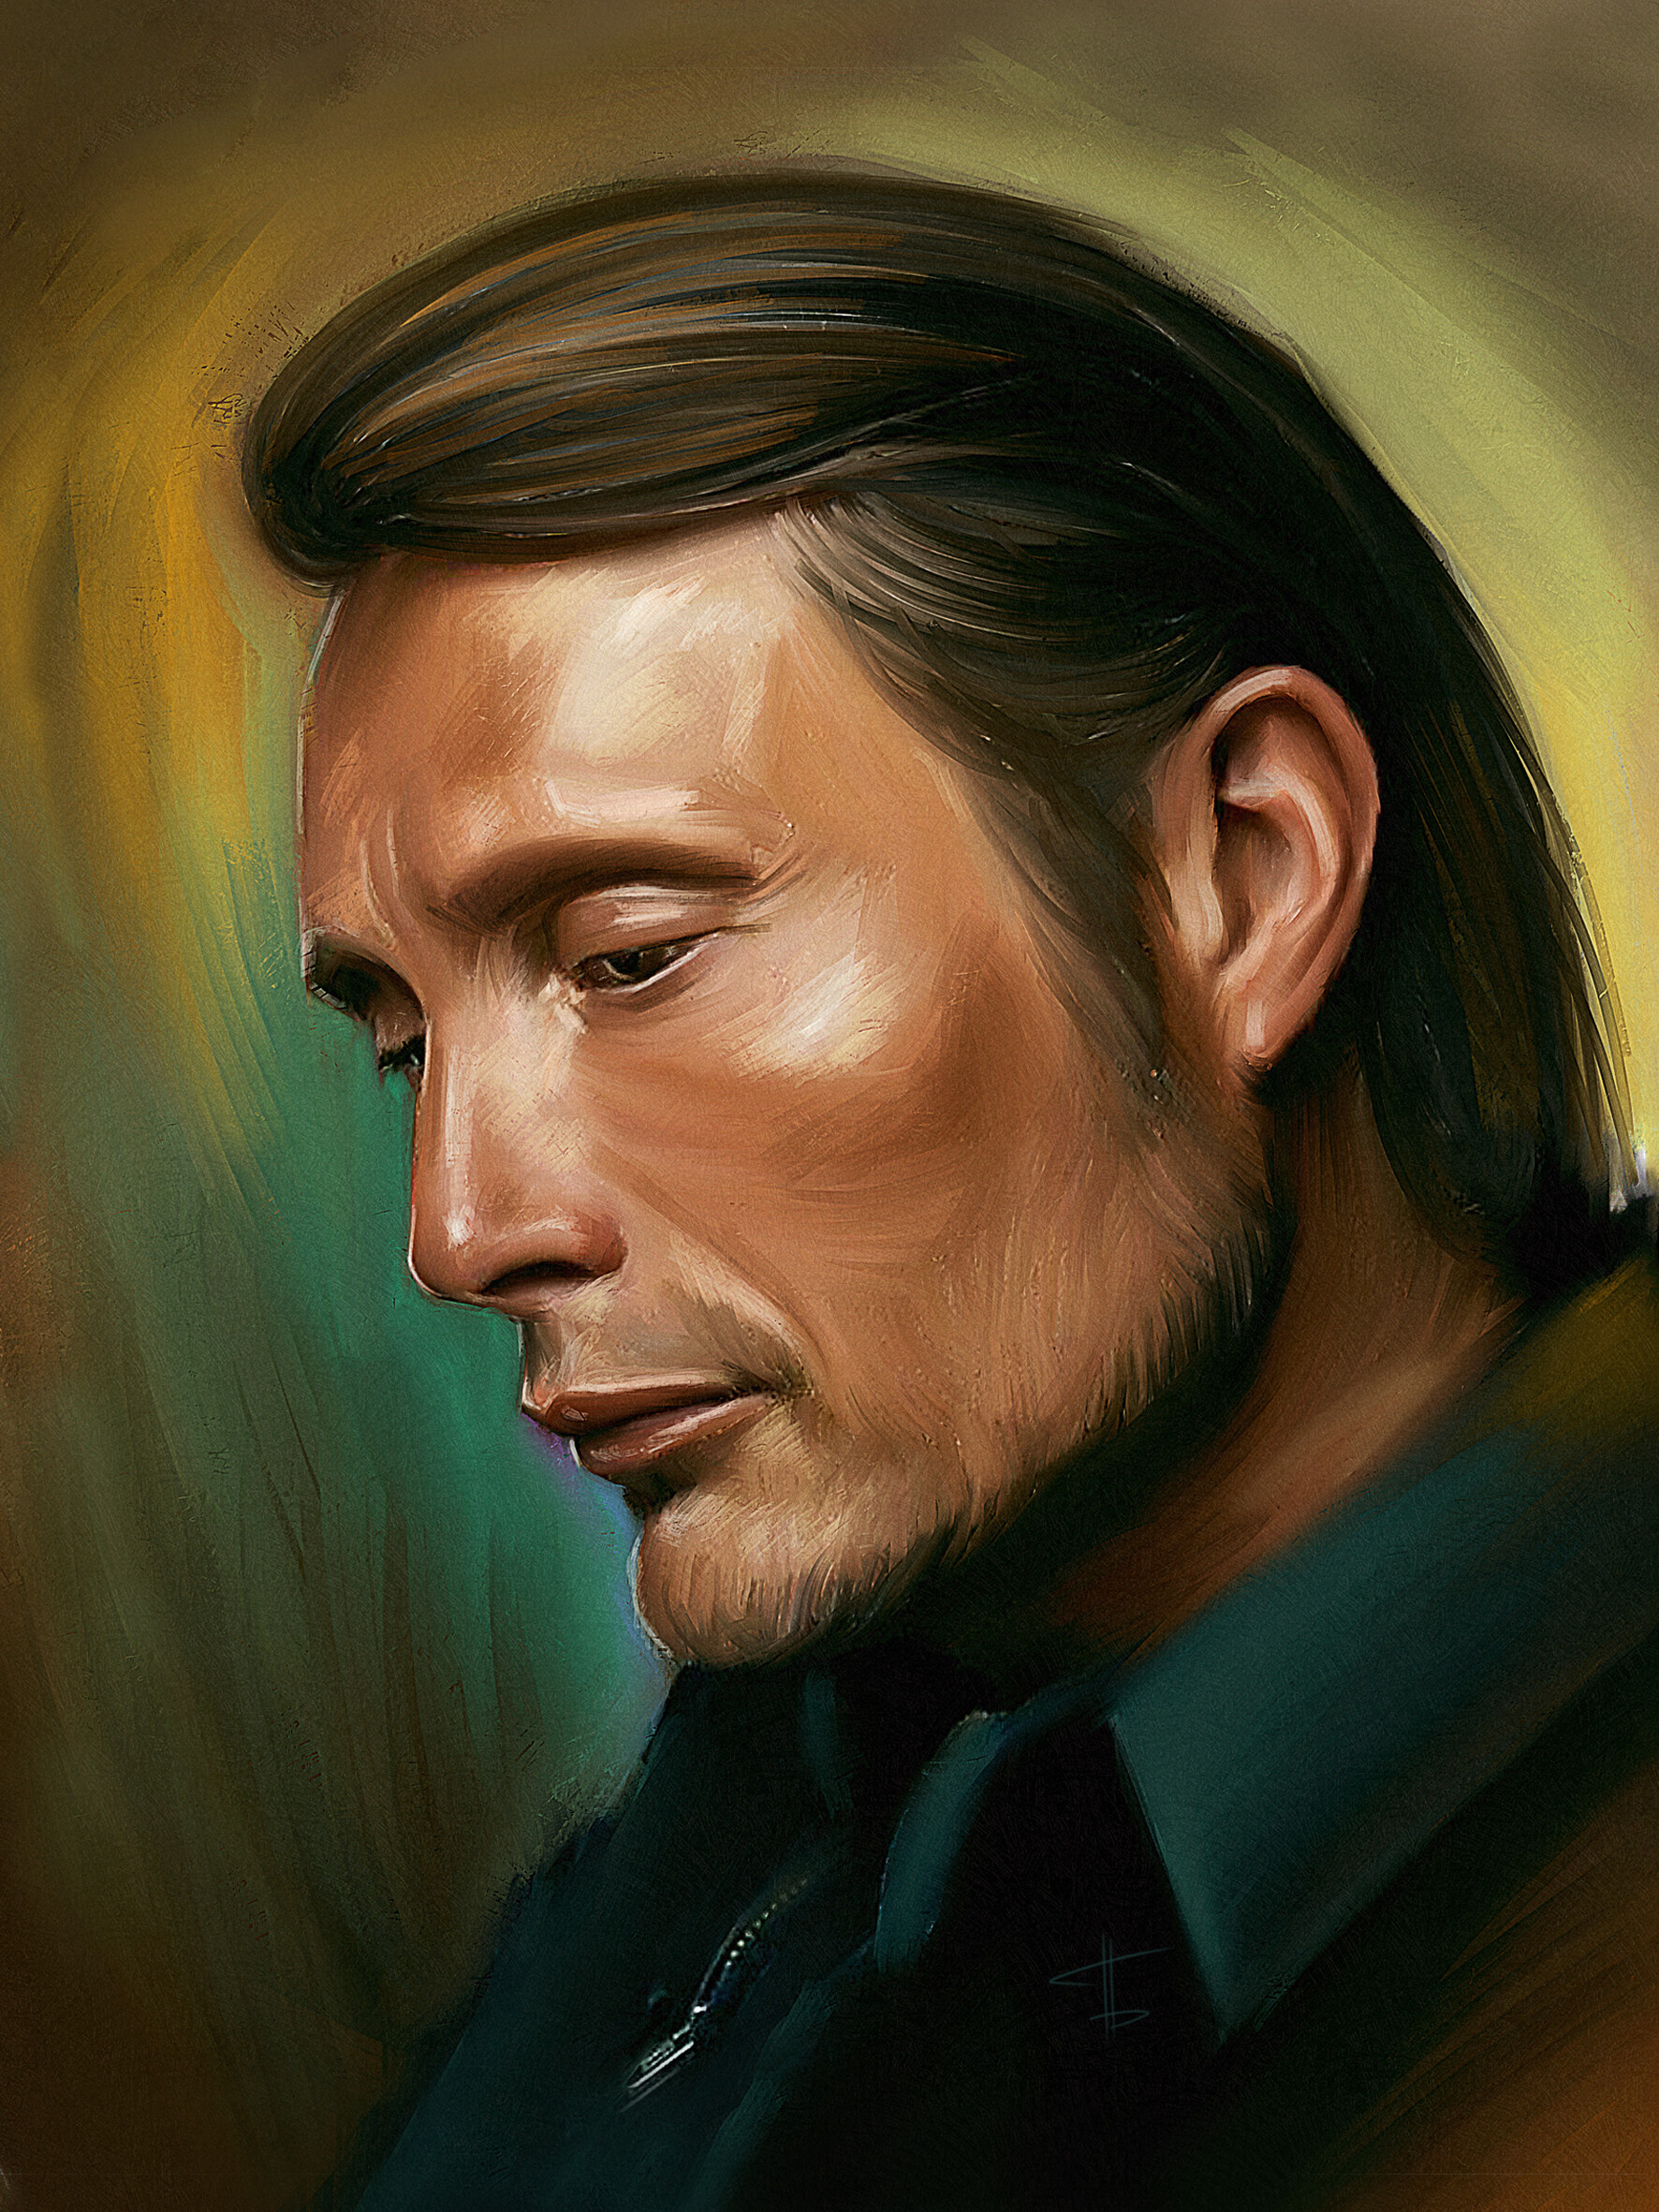 ArtStation - Digital painting, portrait of an actor.